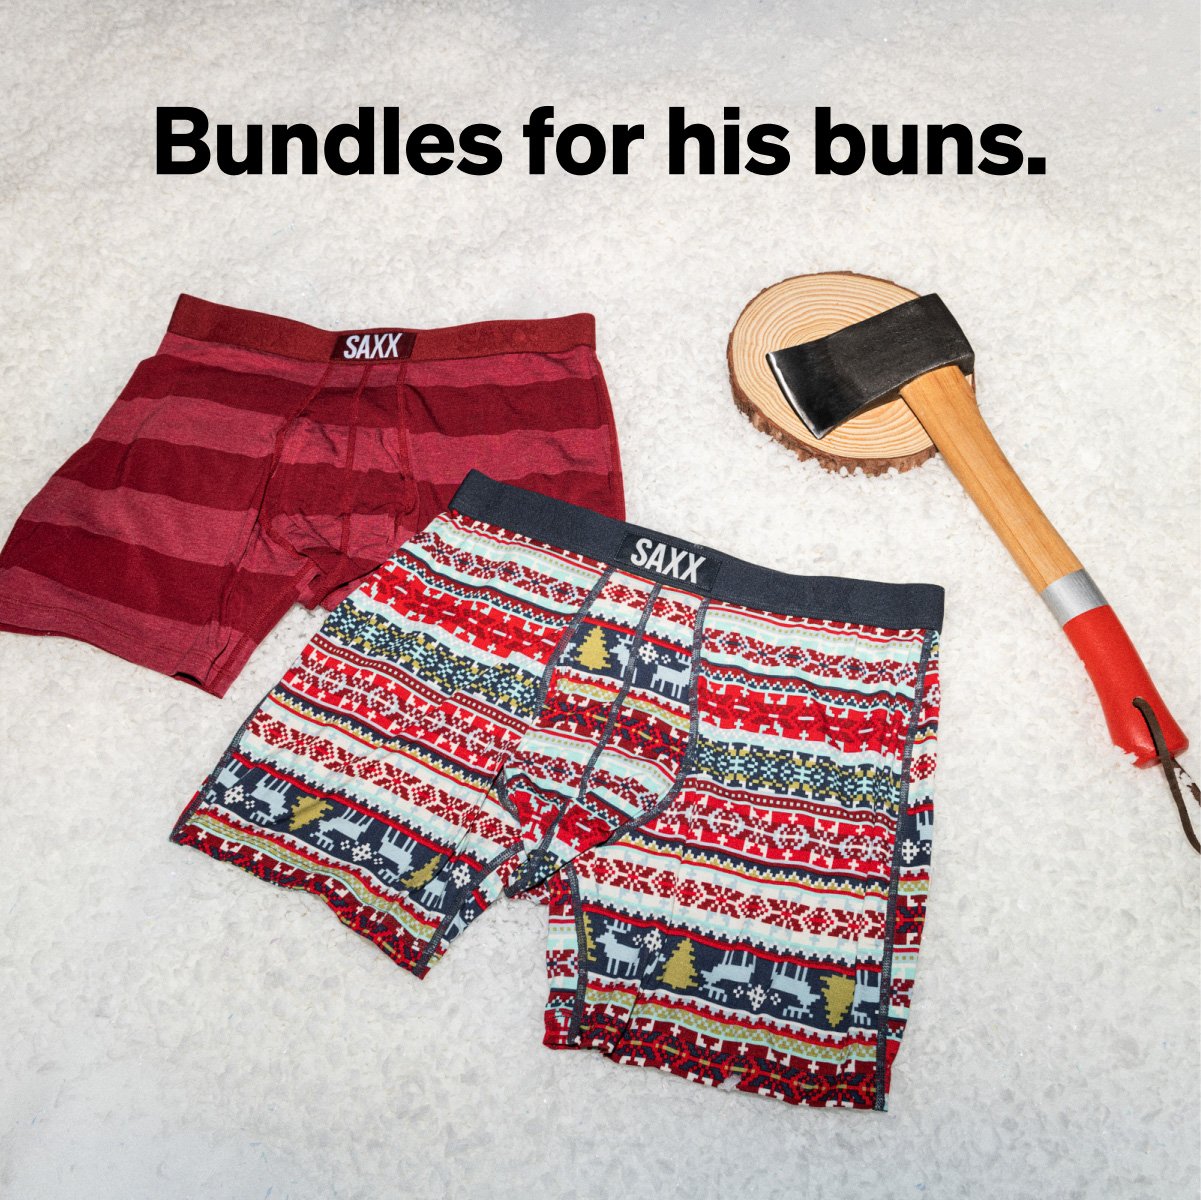 SAXX Underwear: Bundles for his buns